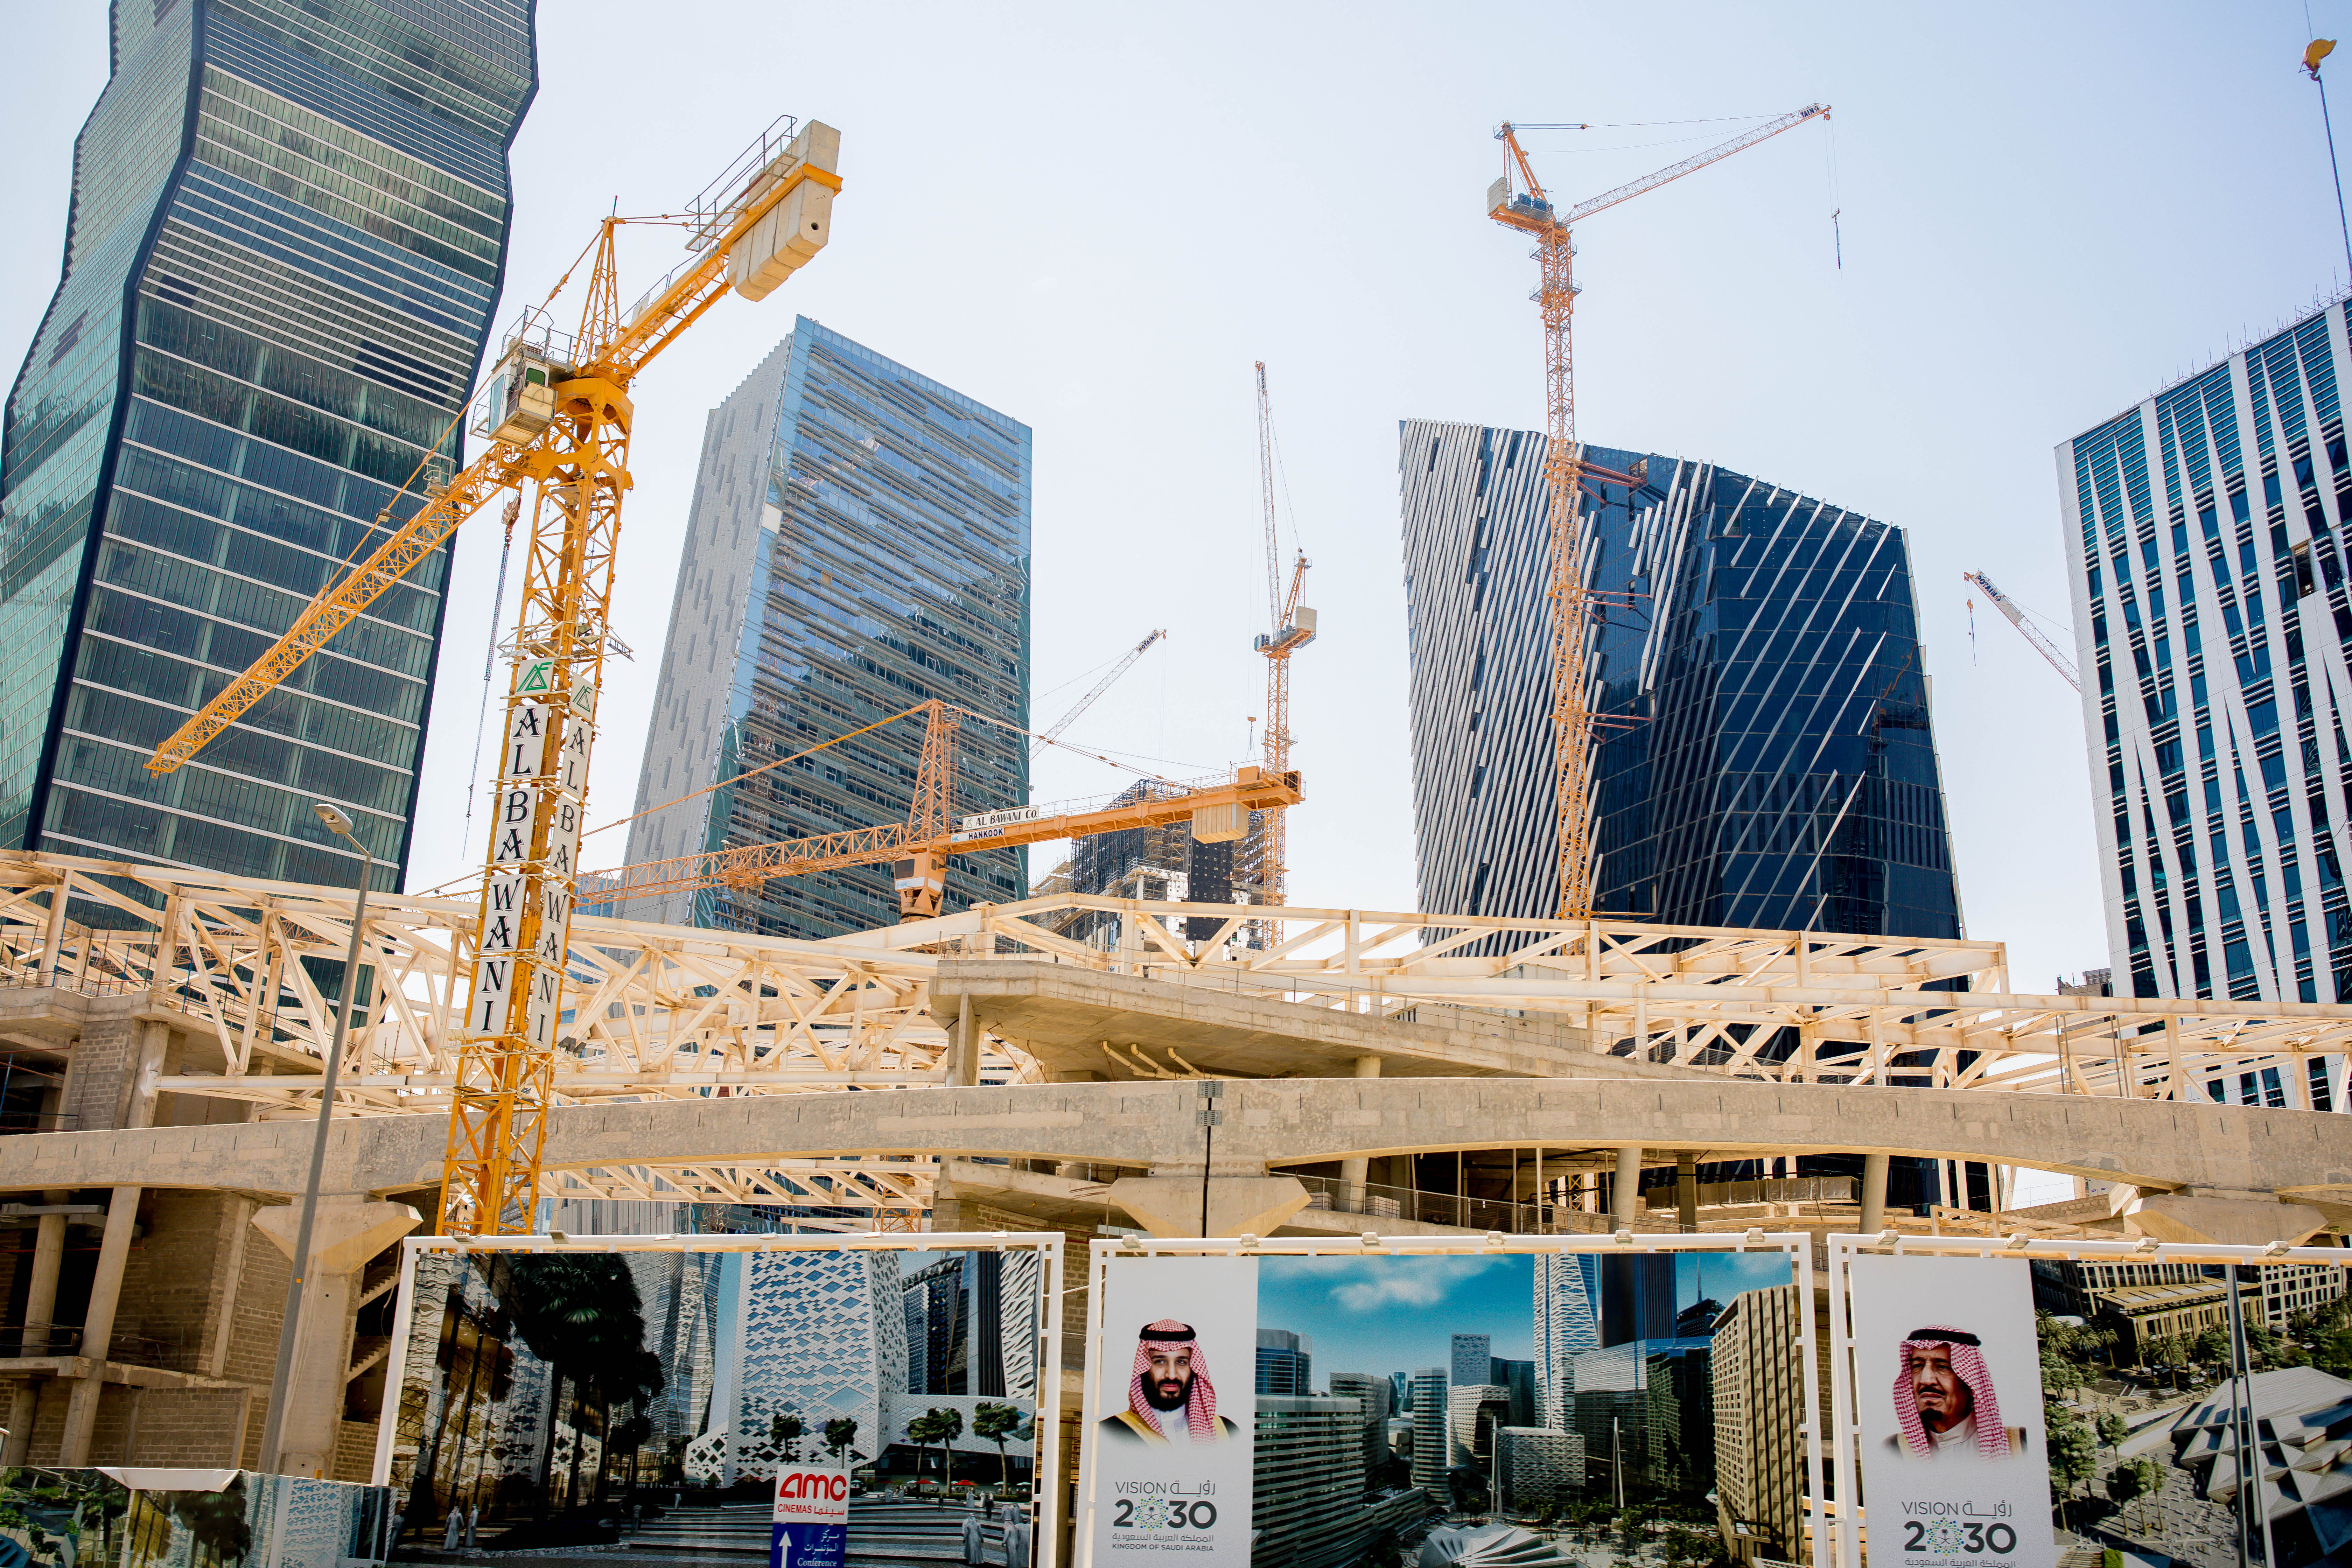 King Abdullah Financial District, a development in Riyadh, Saudi Arabia